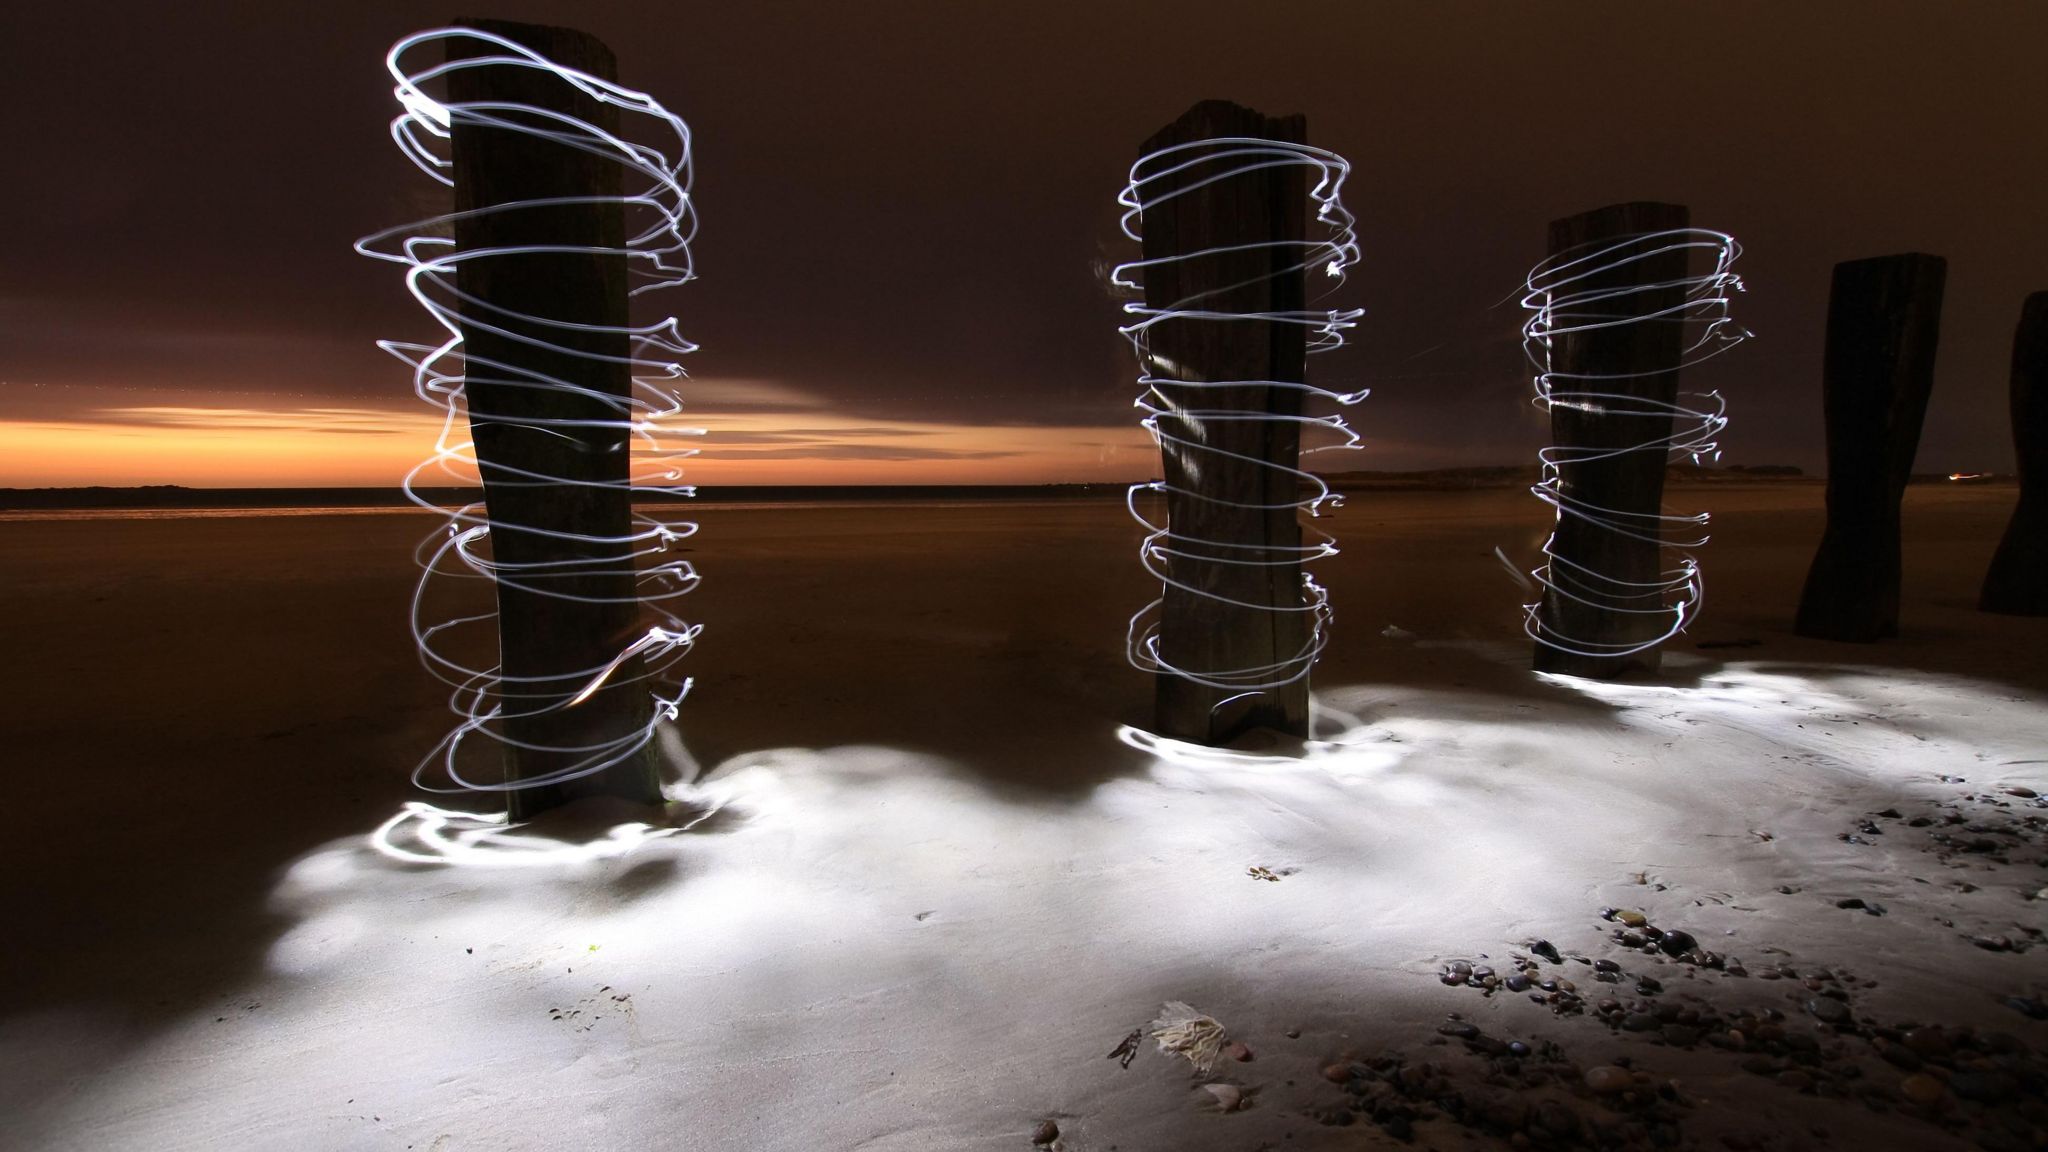 Light around some wooden poles on a beach